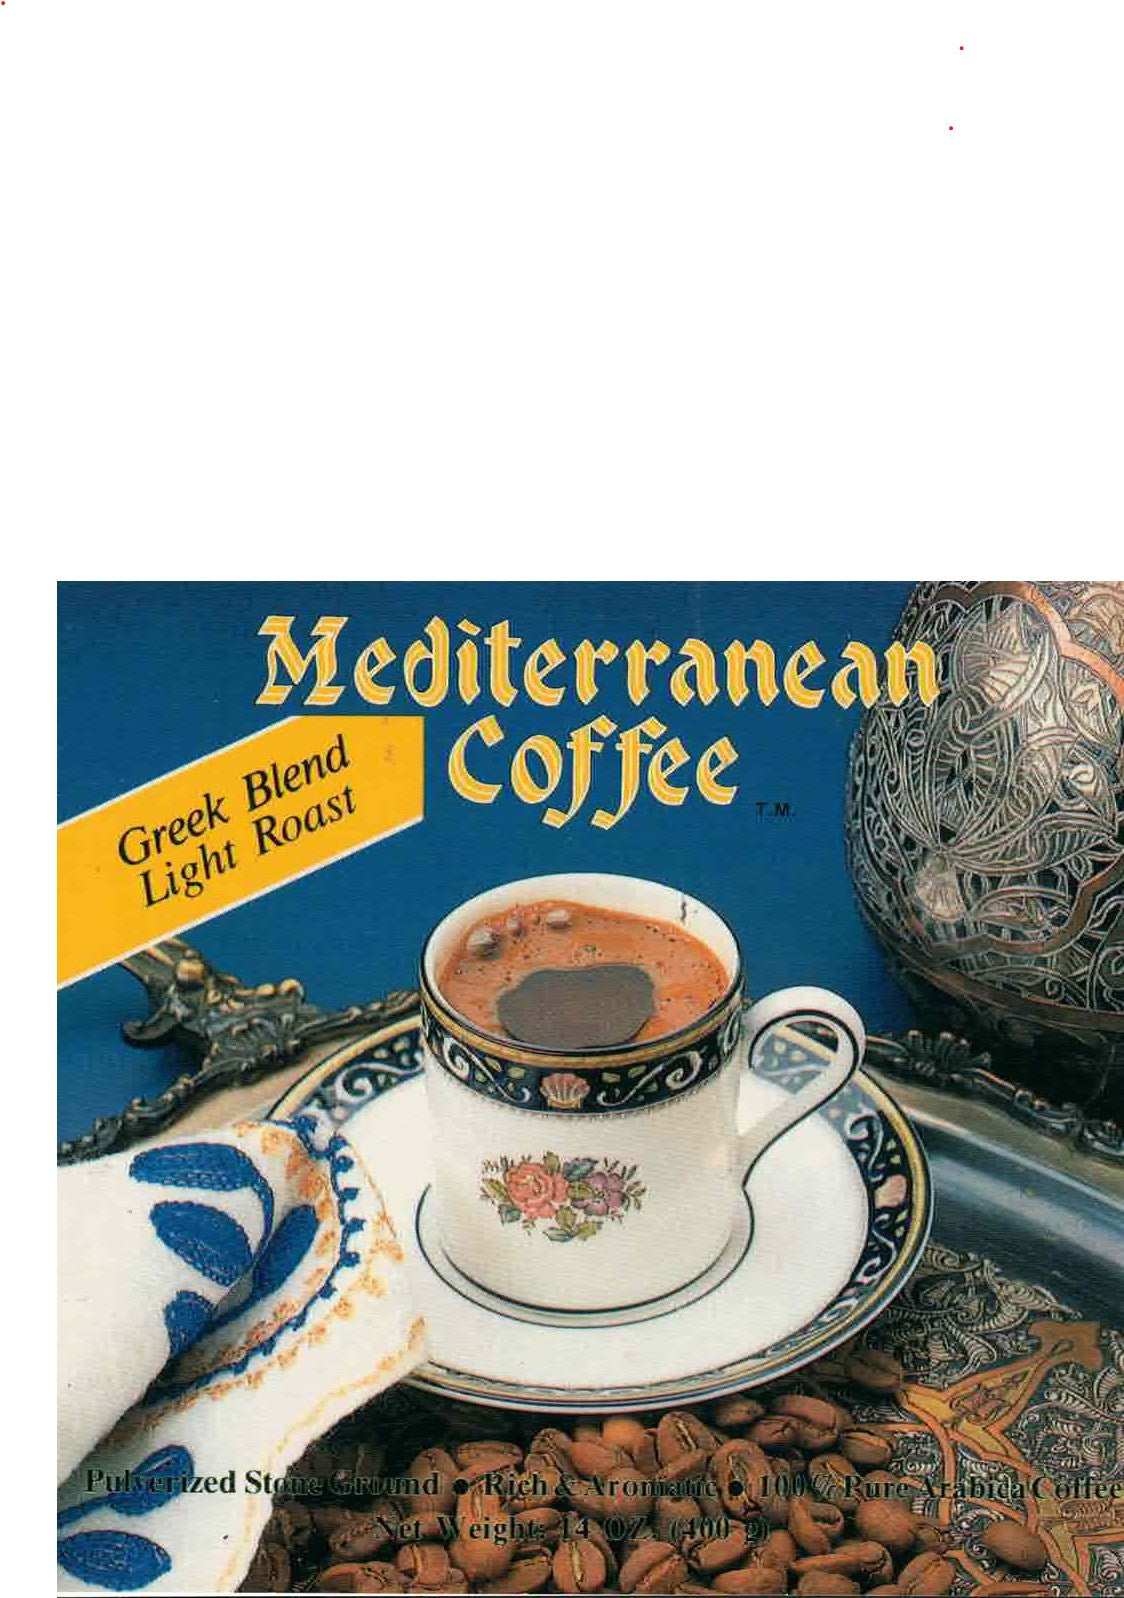 Mediterranean Coffee Light Greek Blend 14 oz, Free shipping